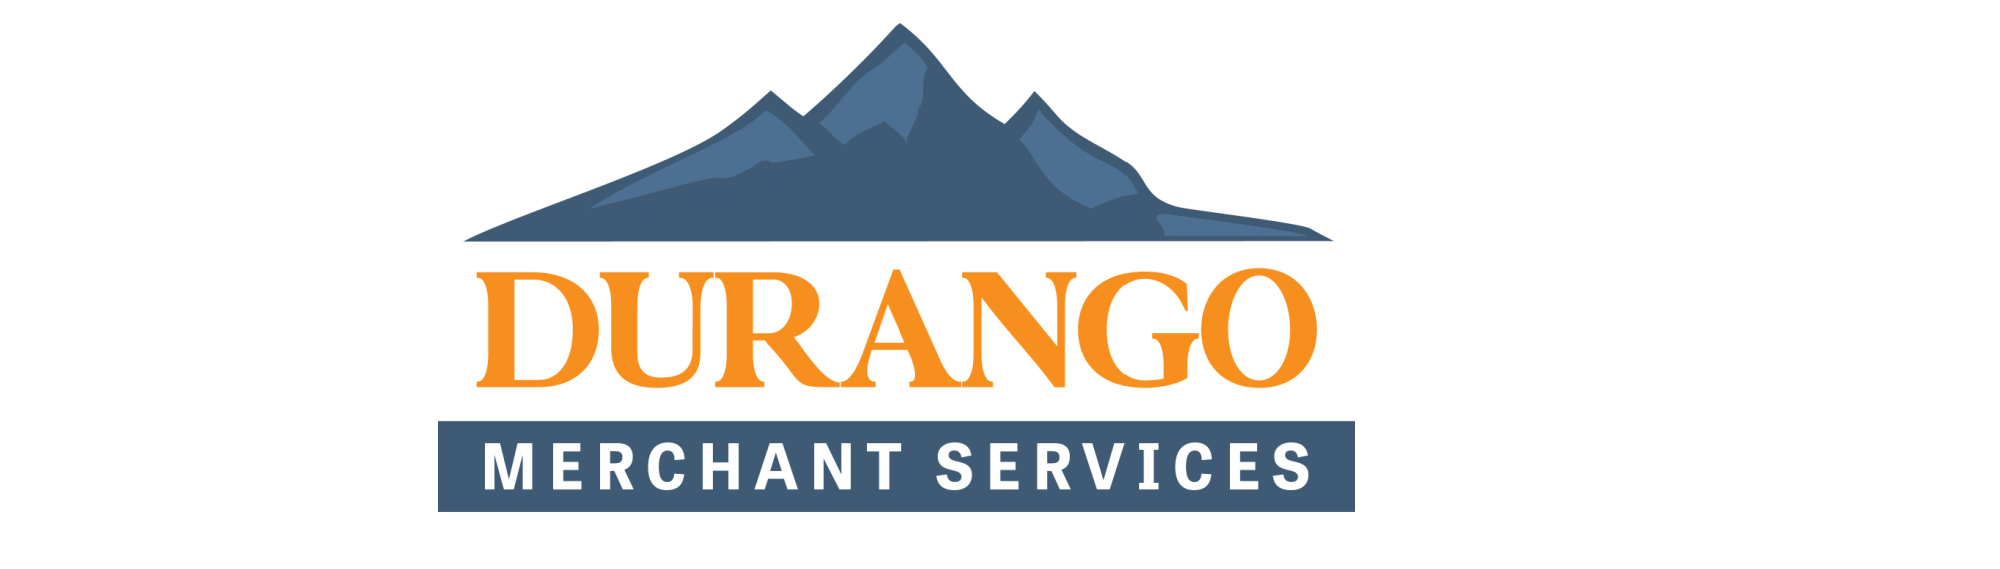 image of durango merchant services